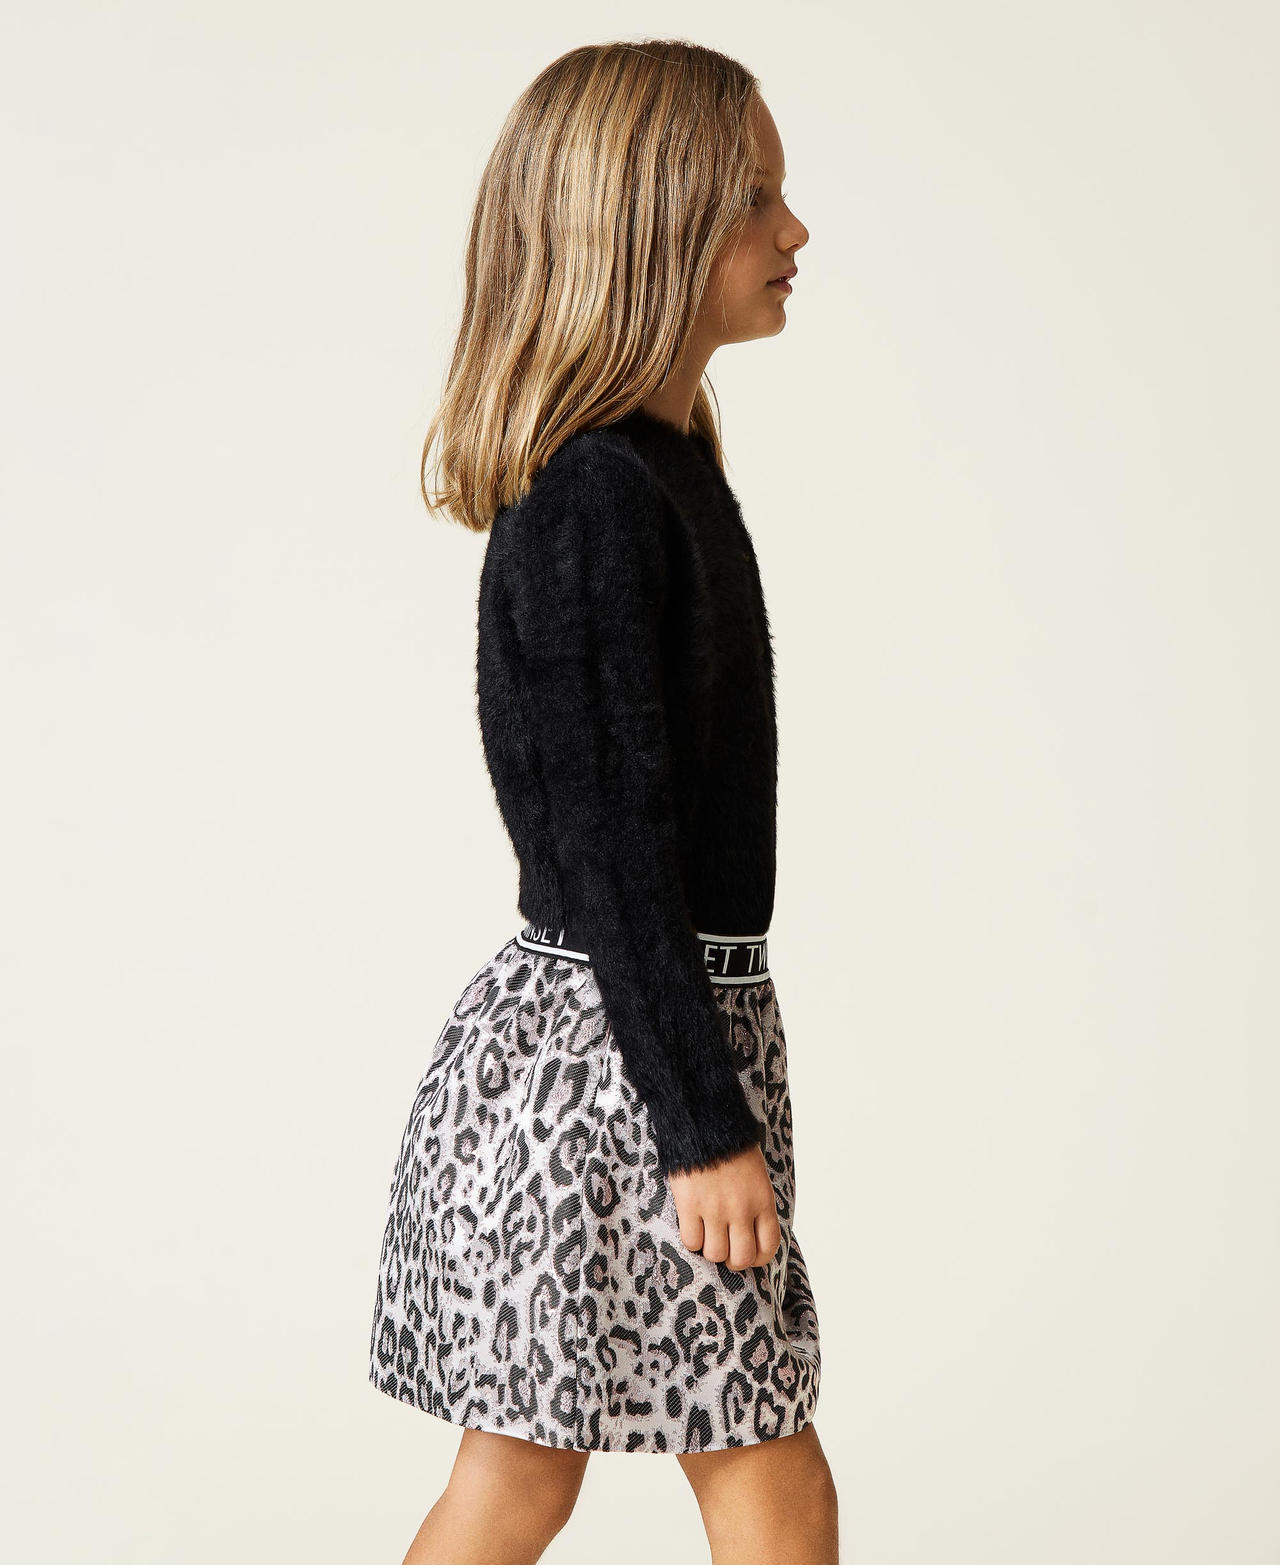 Animal print jacquard skirt Carmine Rose Leopard Spot Jacquard Girl 212GJ2260-02